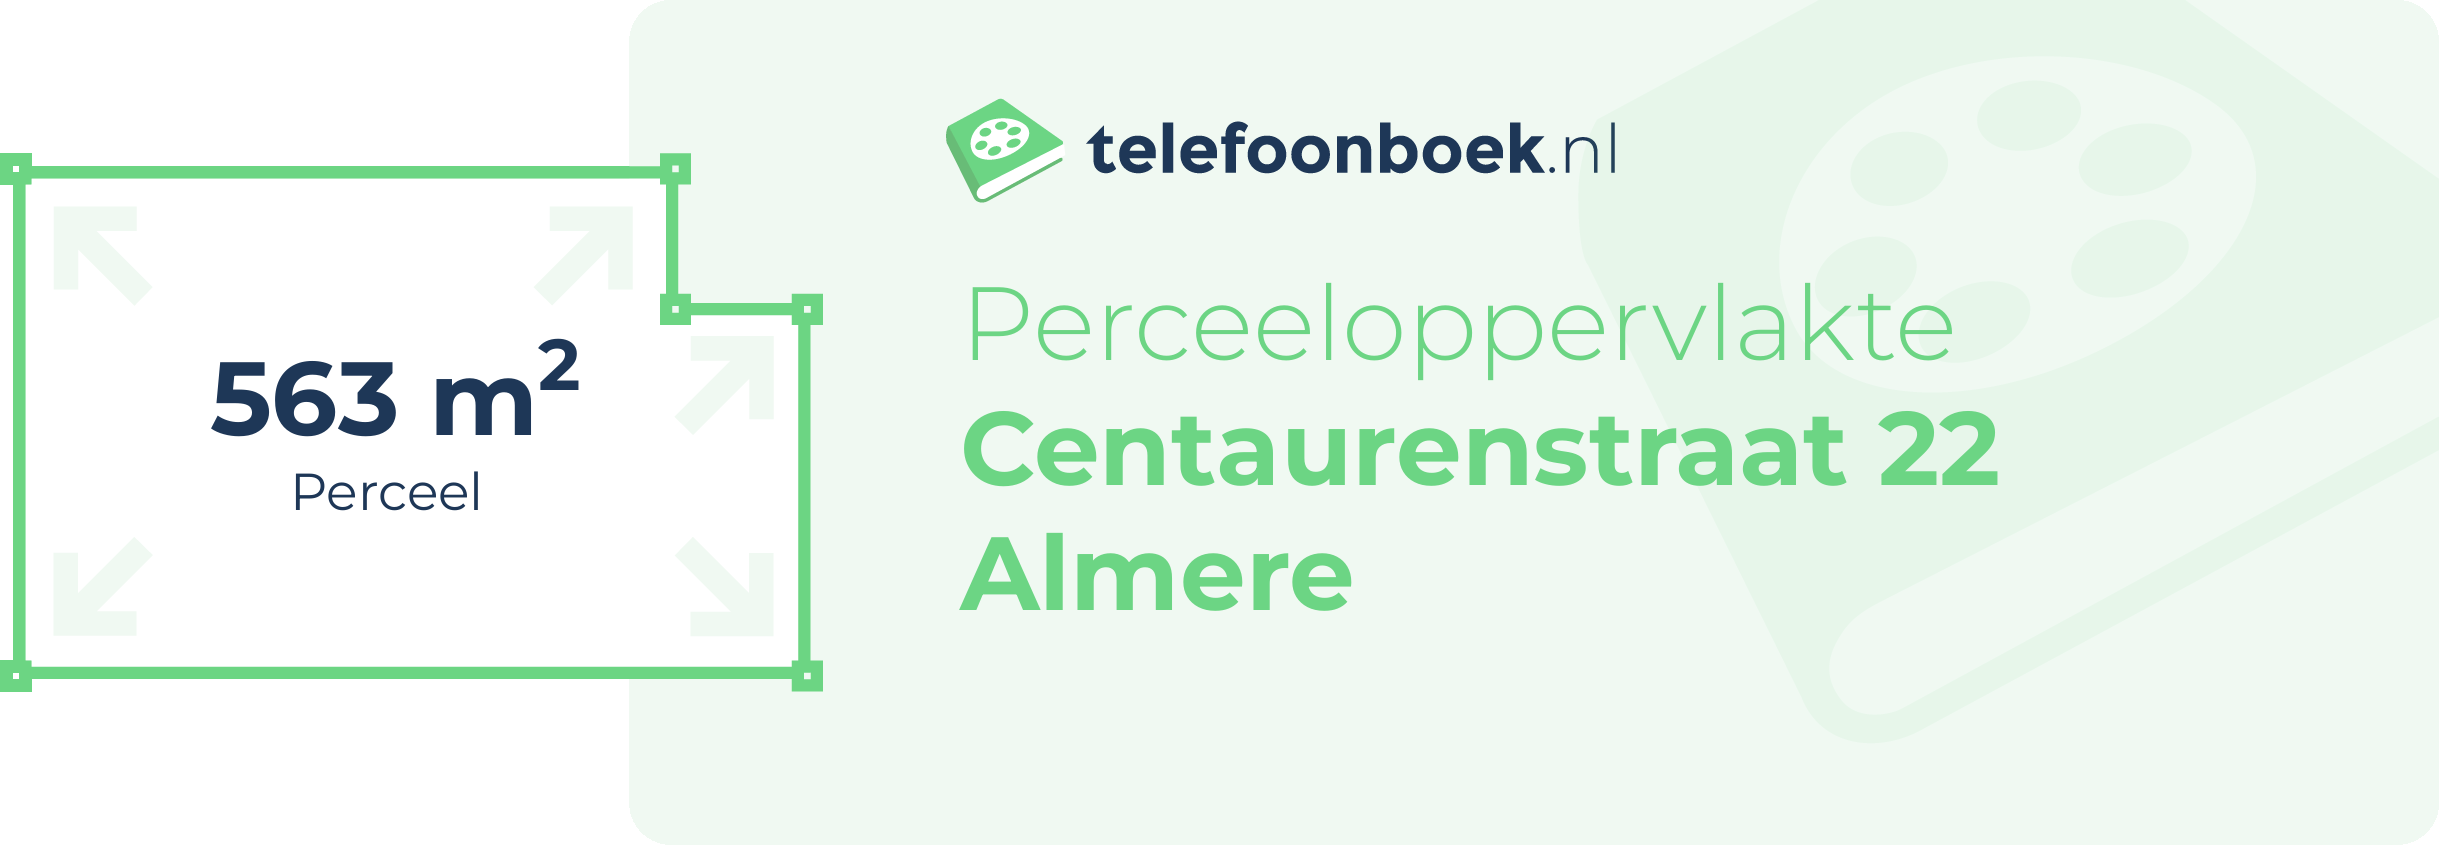 Perceeloppervlakte Centaurenstraat 22 Almere